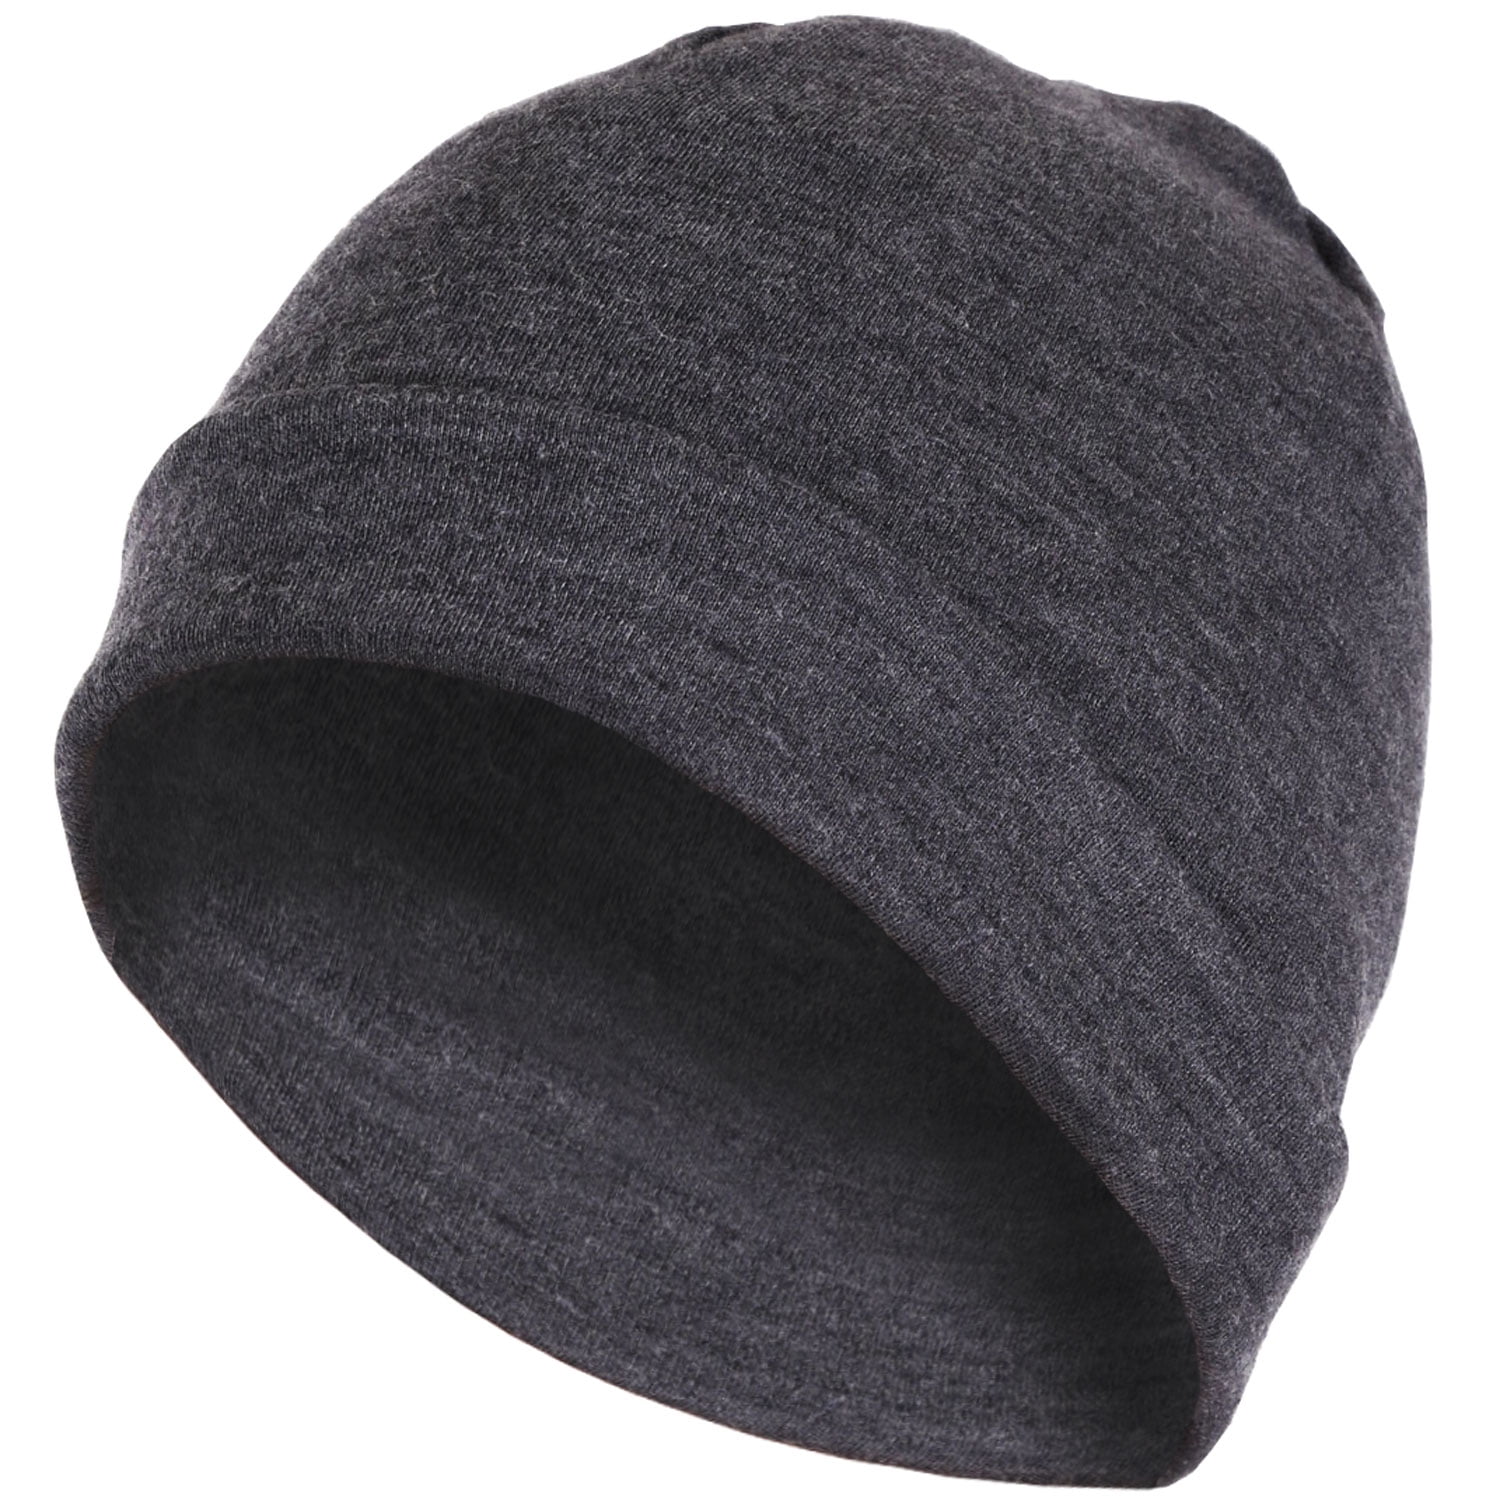 MERIWOOL Unisex Merino Wool Cuff Beanie Hat - Choose Your